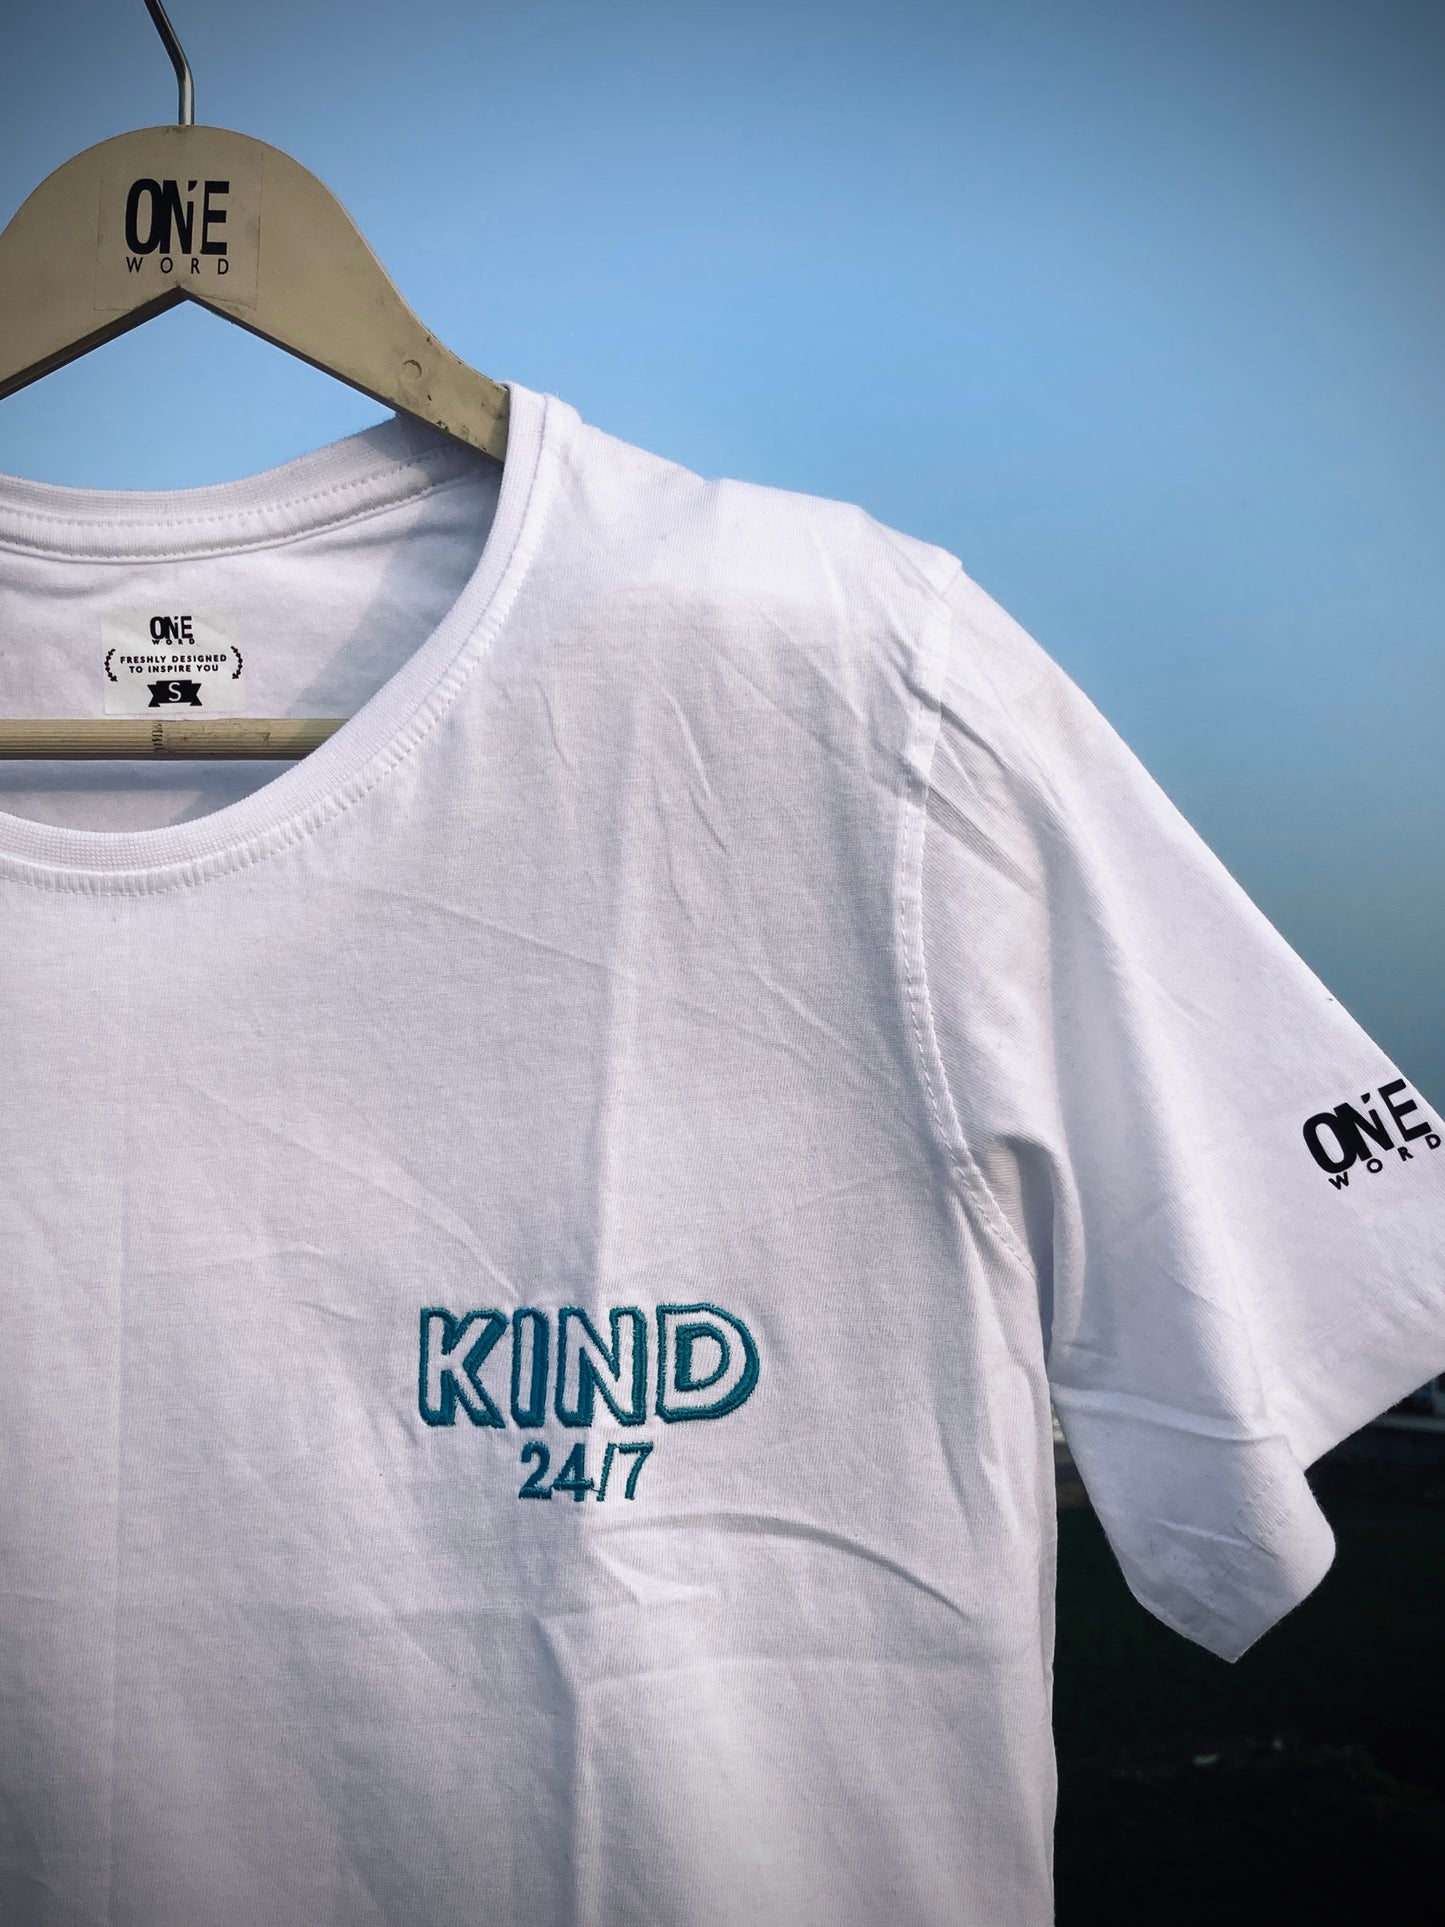 [keyword]-One Word StoreKind 24/7 Unisex T-shirt